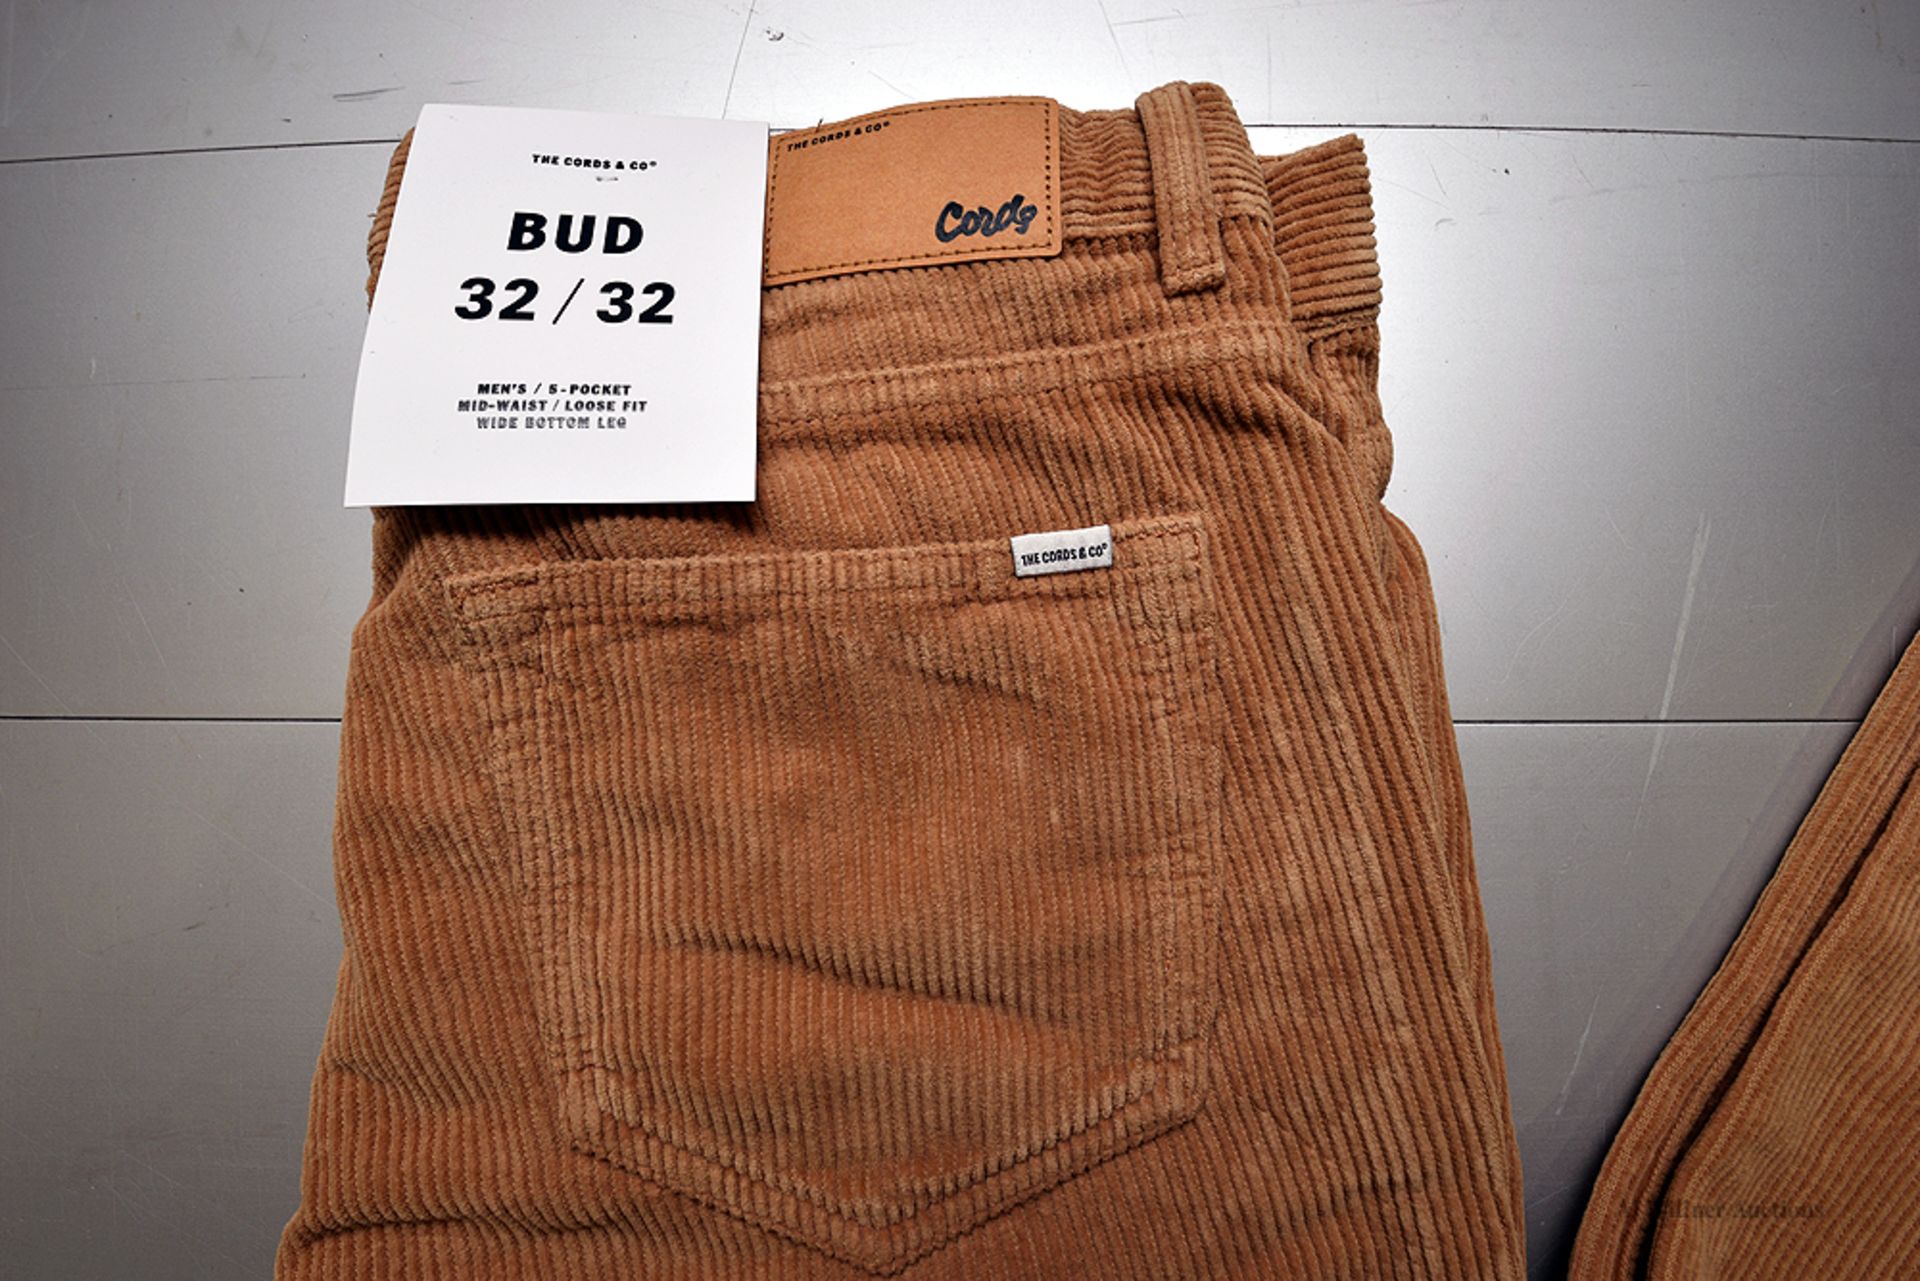 The Cords & Co. "Bud" Style, Men's/5-Pocket/Mid-Waist/Loose Fit/Wide Bottom Leg Pants - Bild 2 aus 5